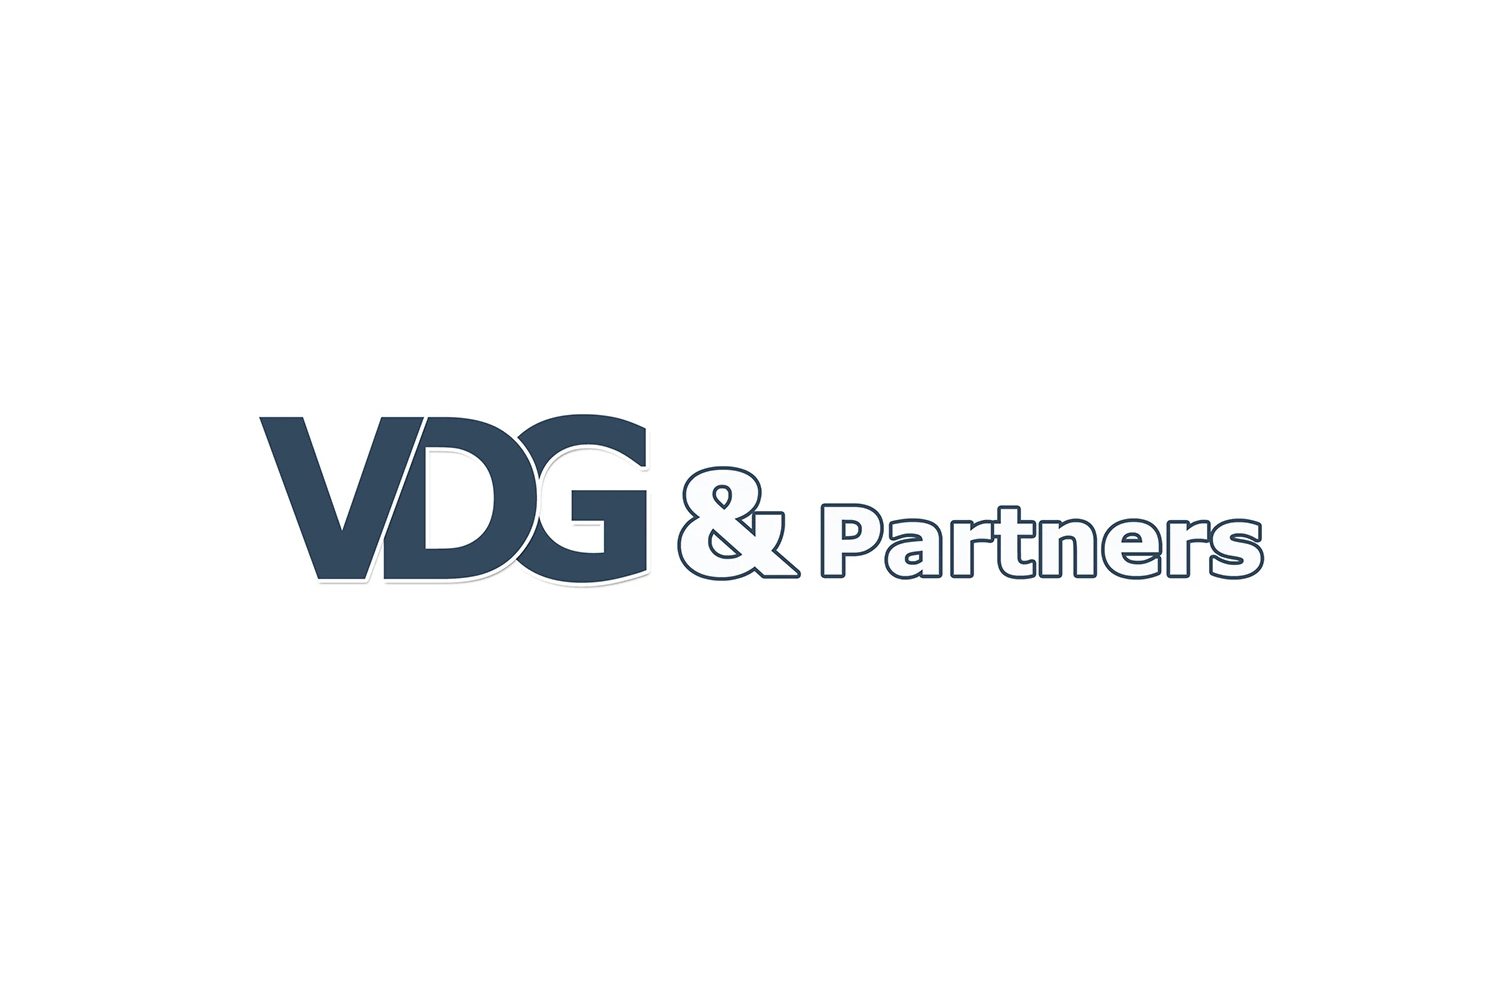 Rob van der Graaf - VDG & Partners